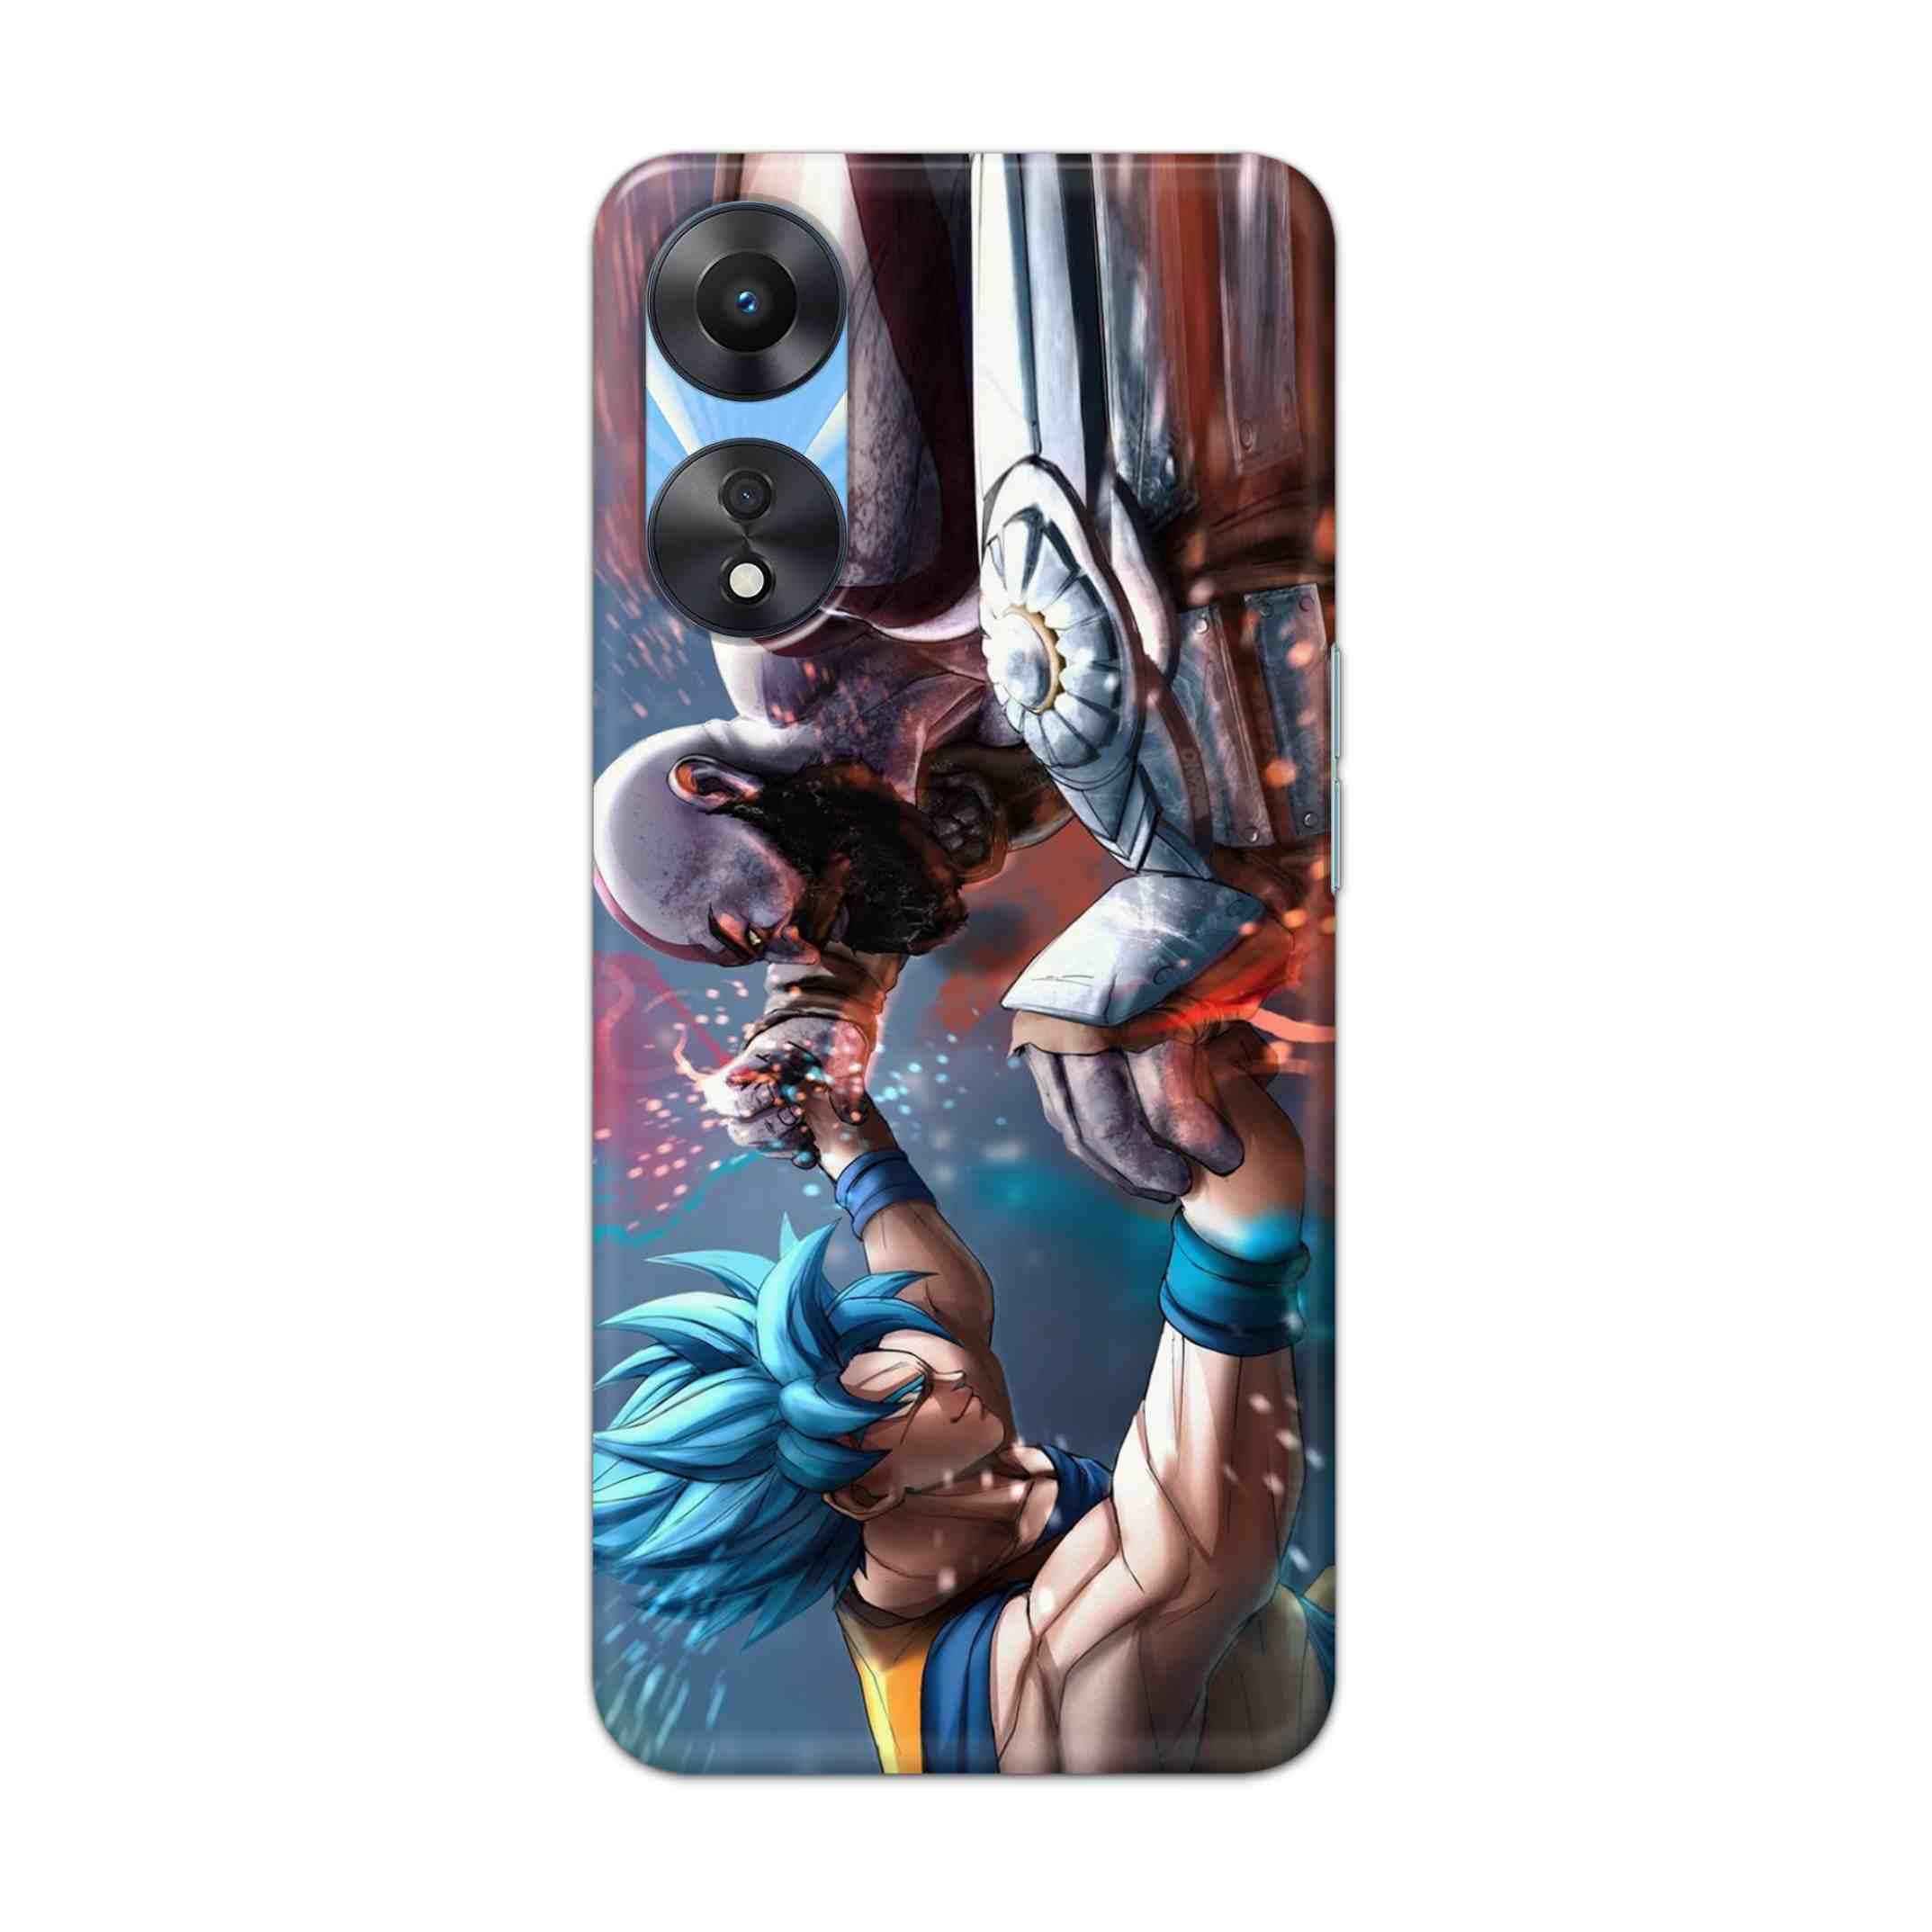 Buy Goku Vs Kratos Hard Back Mobile Phone Case Cover For OPPO A78 Online